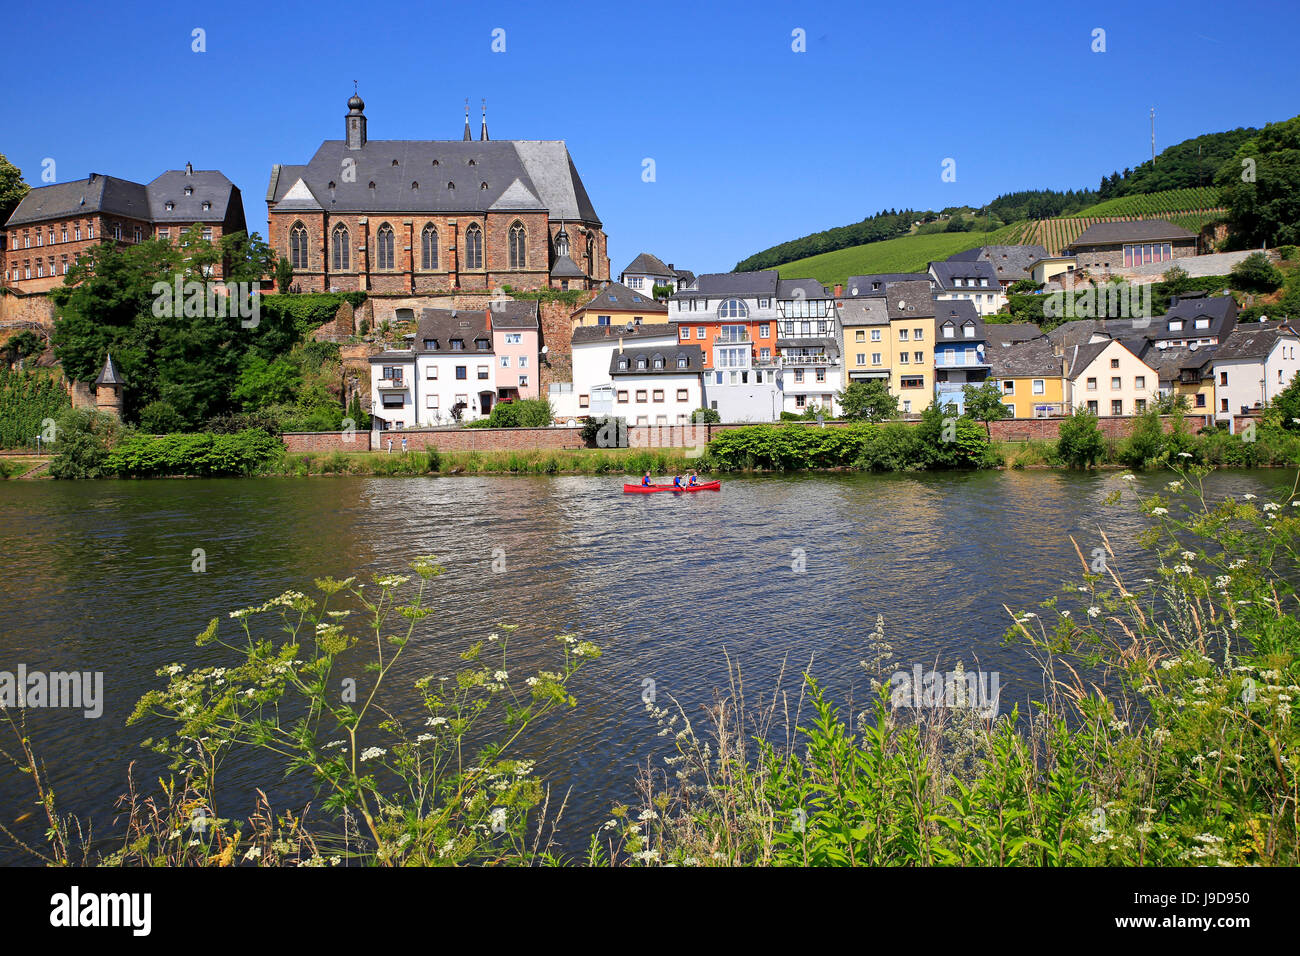 View towards Church of St. Lawrence in Saarburg on River Saar, Rhineland-Palatinate, Germany, Europe Stock Photo